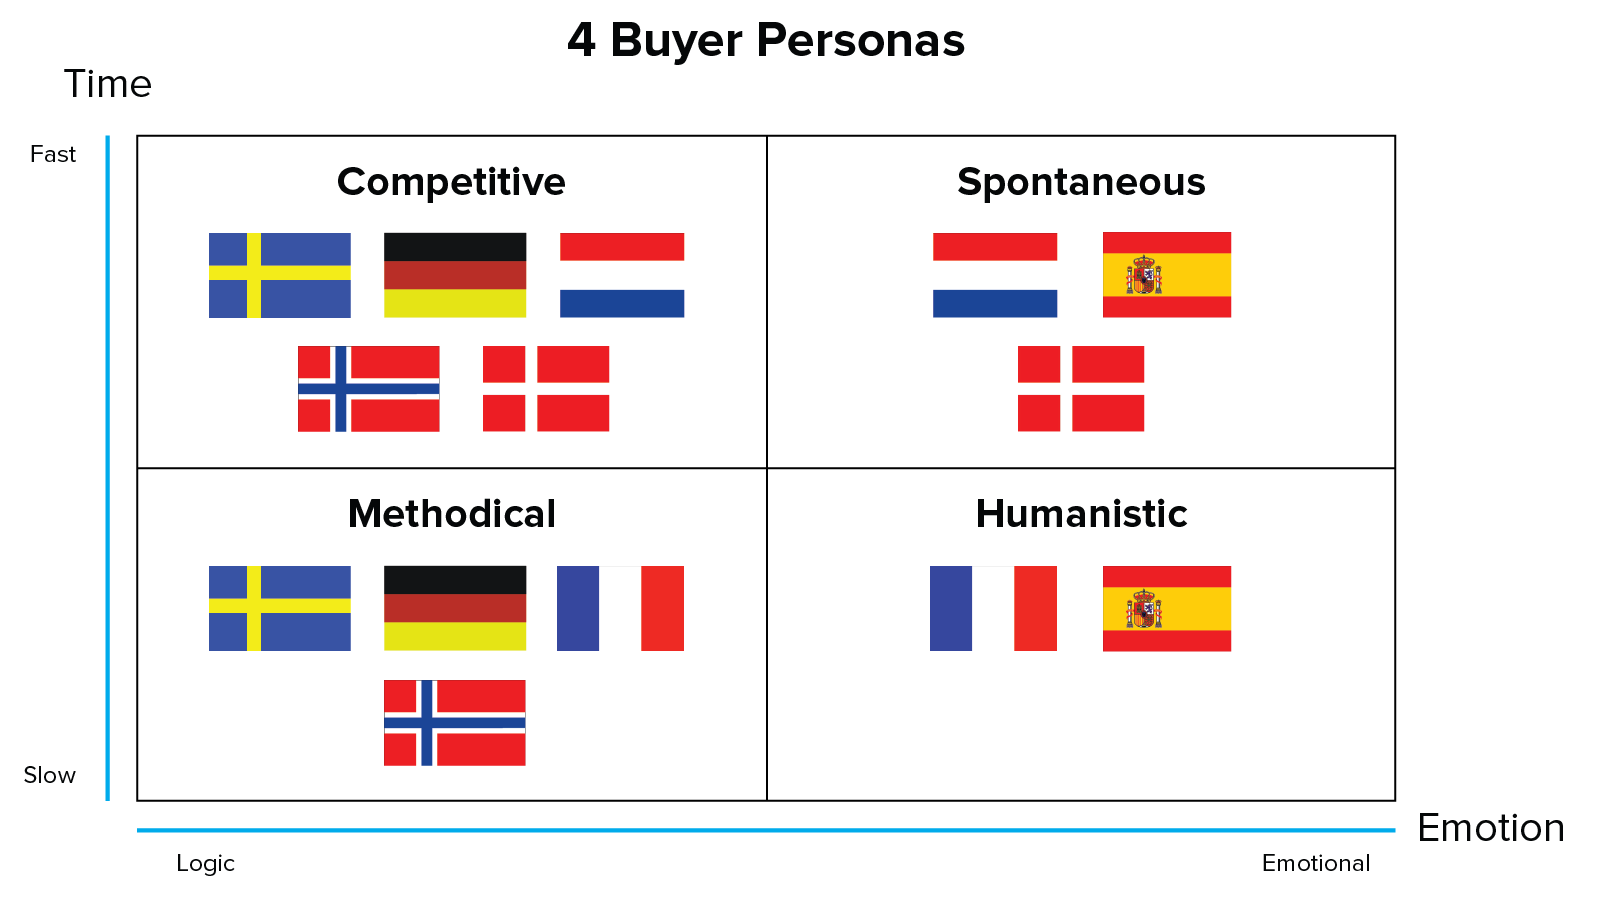 4 buyer personas in Europe